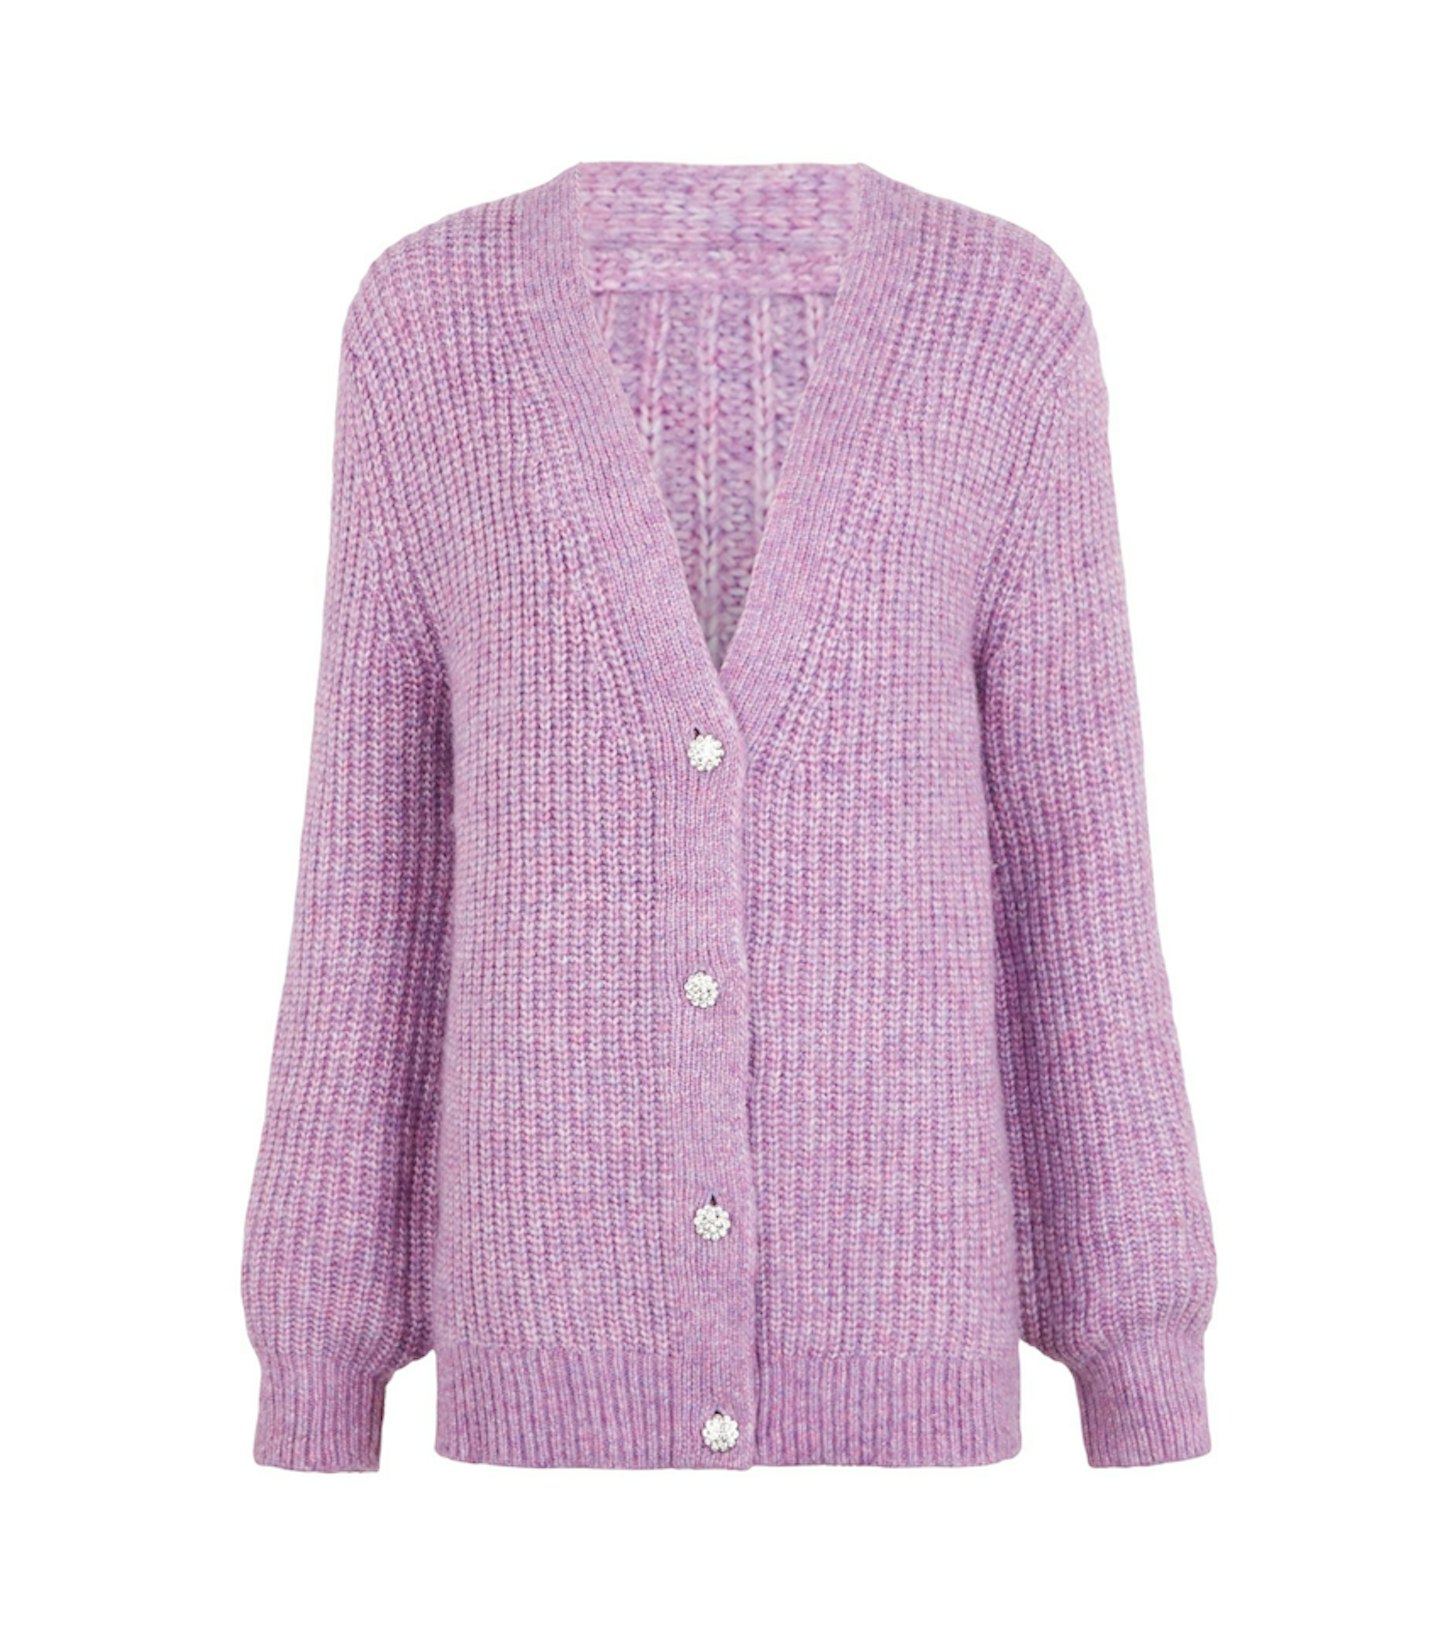 Millie Mackintosh X Very Knitted Longline Jewel Button Cardigan - Purple